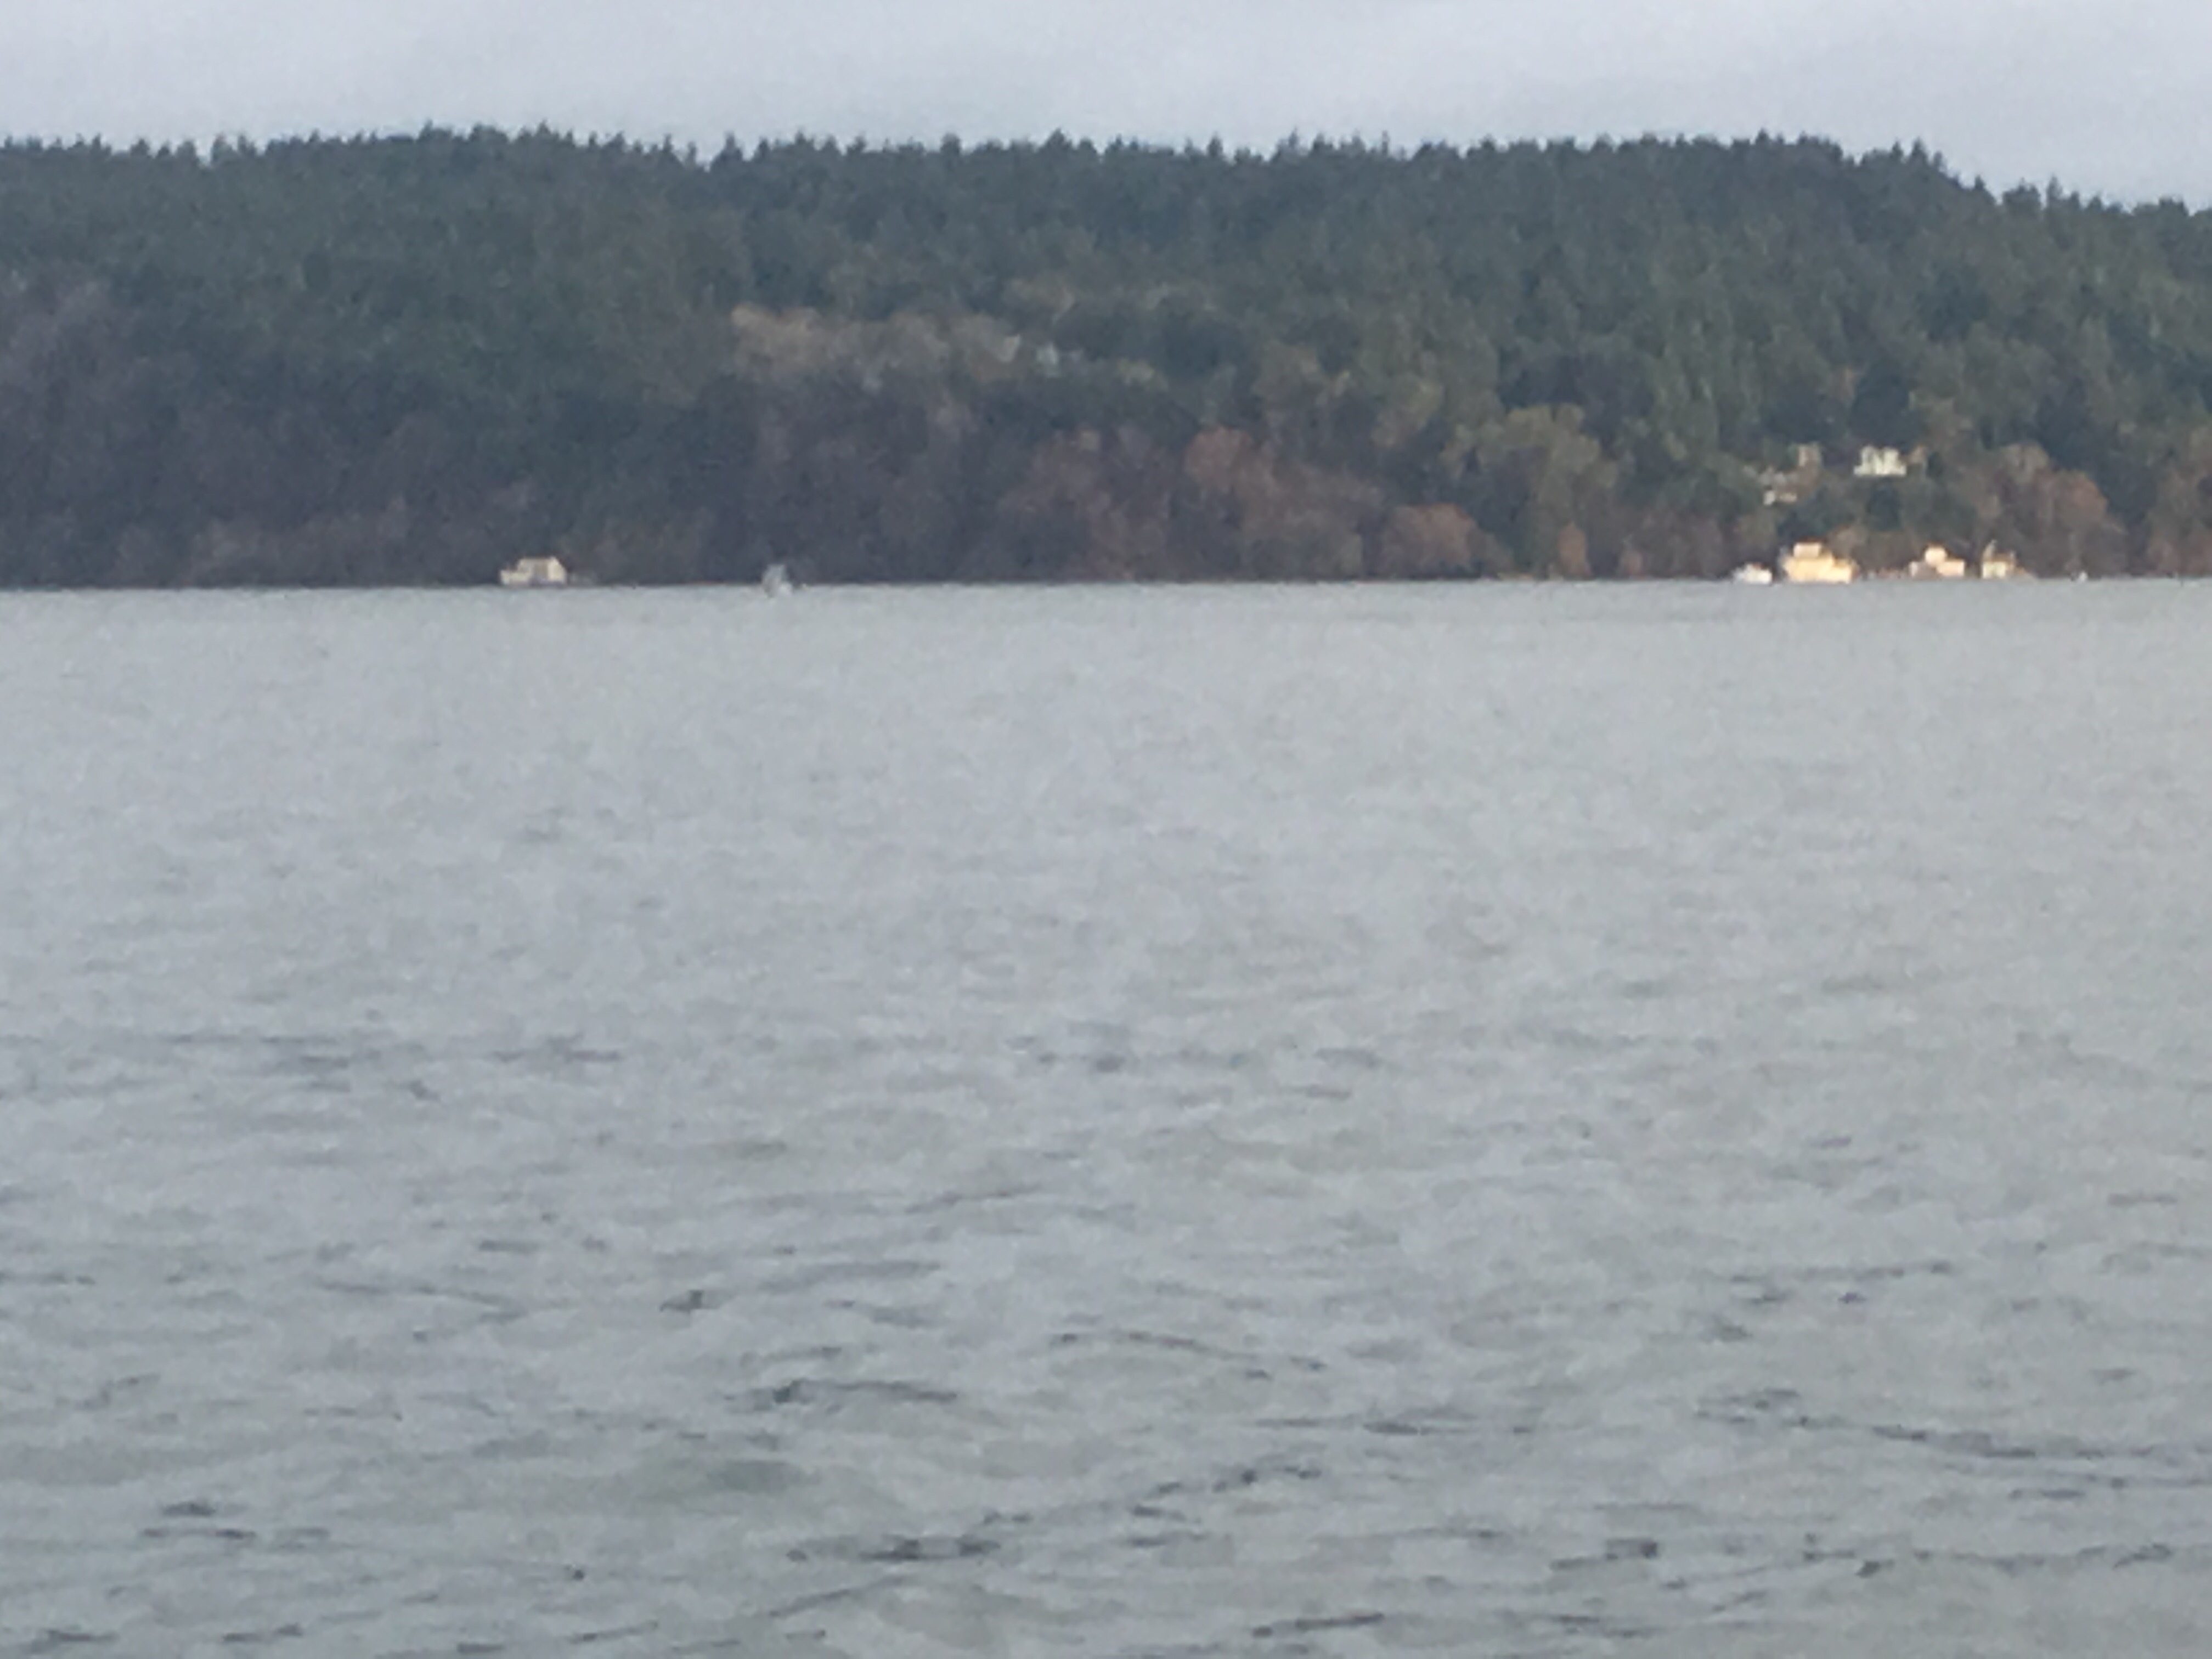 Orca spouting near Vashon Island